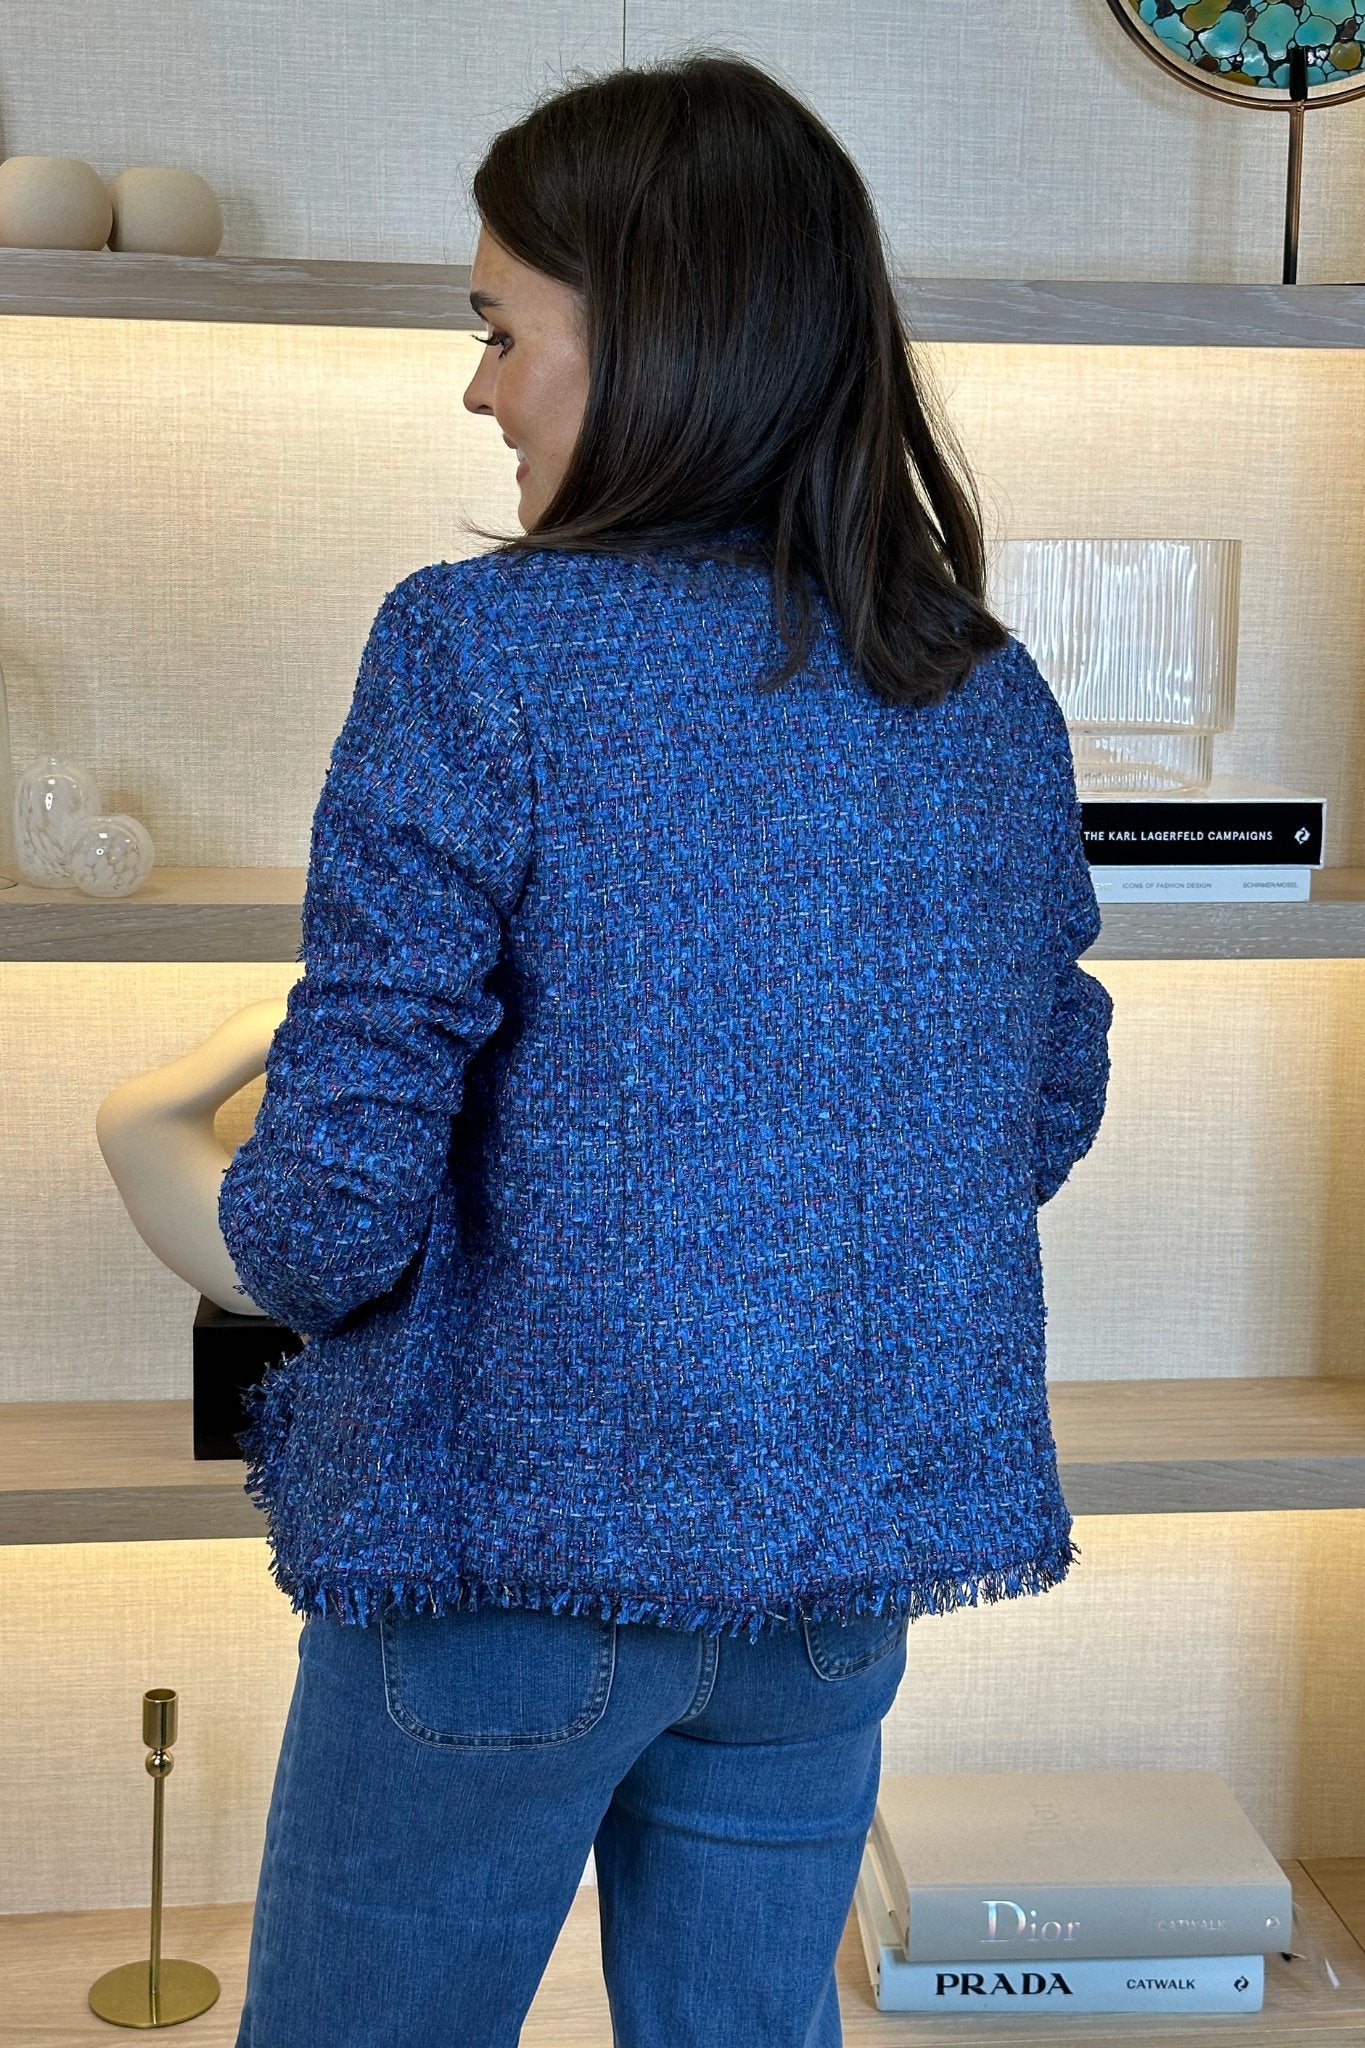 Arabella Tweed Blazer In Royal Blue - The Walk in Wardrobe